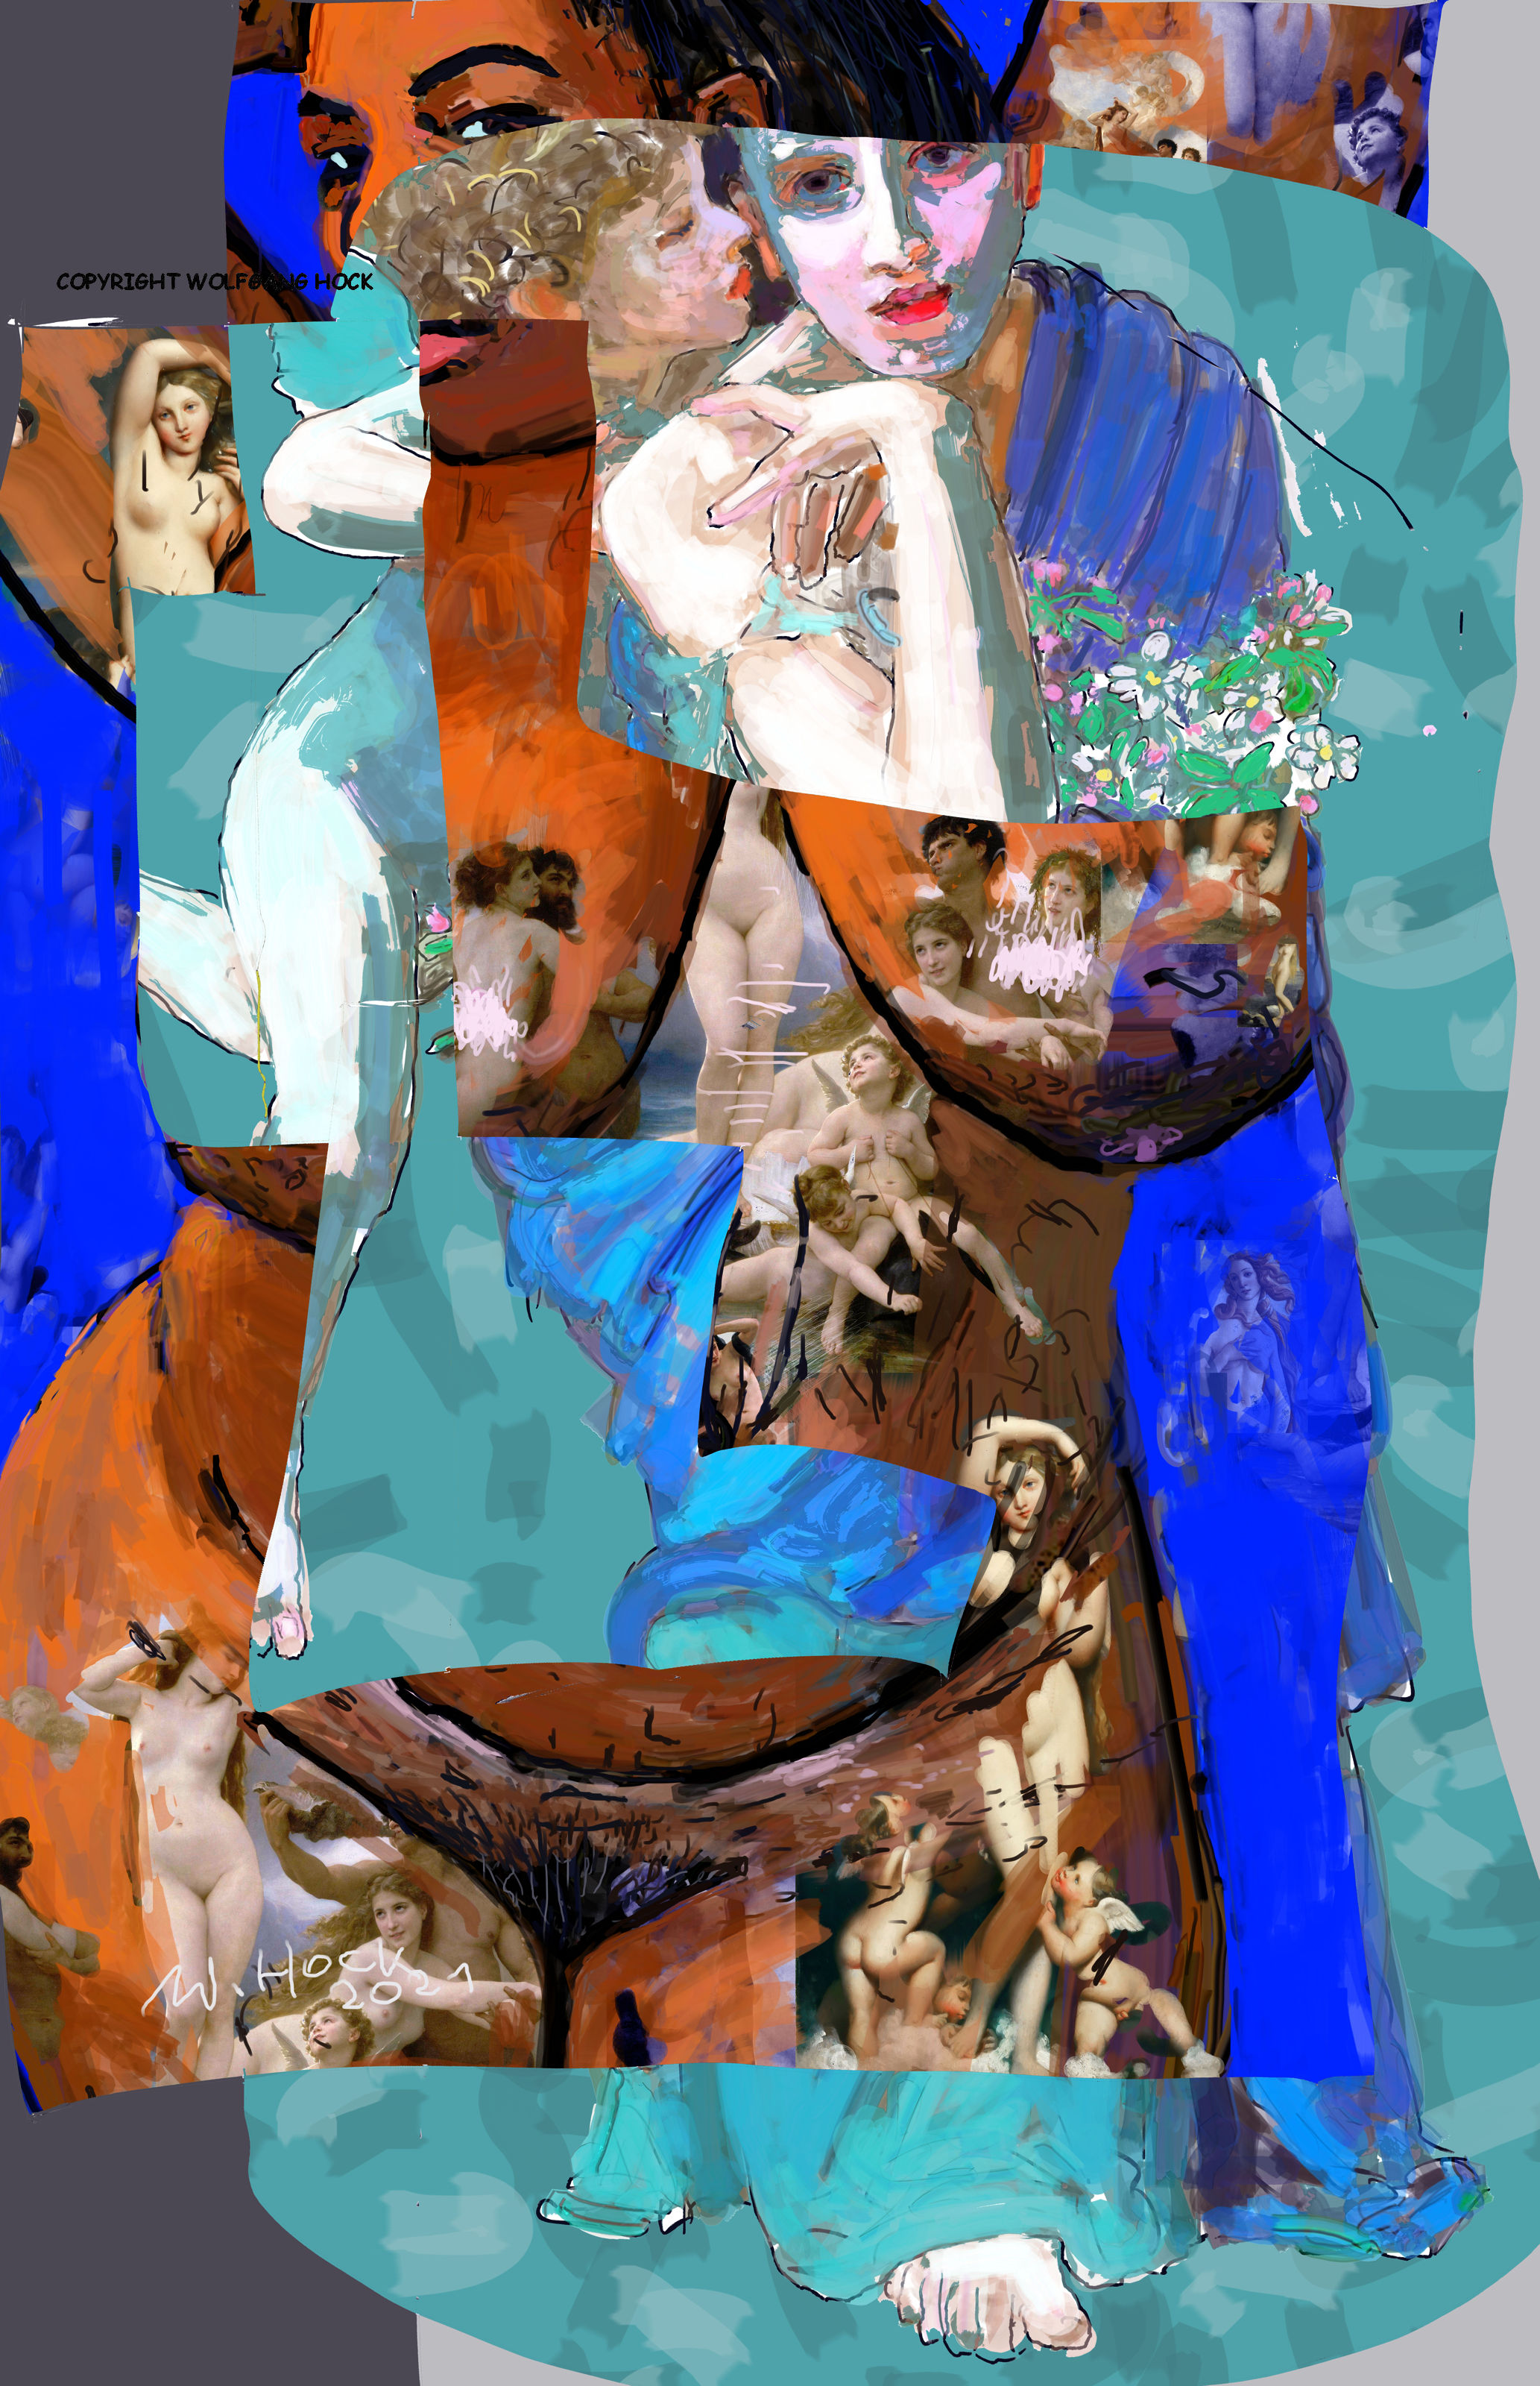 Jungfrau mit Venus und Collage III - Virgin with Venus and collage III - Virgem com Venus e  colagem III 2021   Handmade digital painting and collage on canvas 110 x 170 cm (105 megapixels)